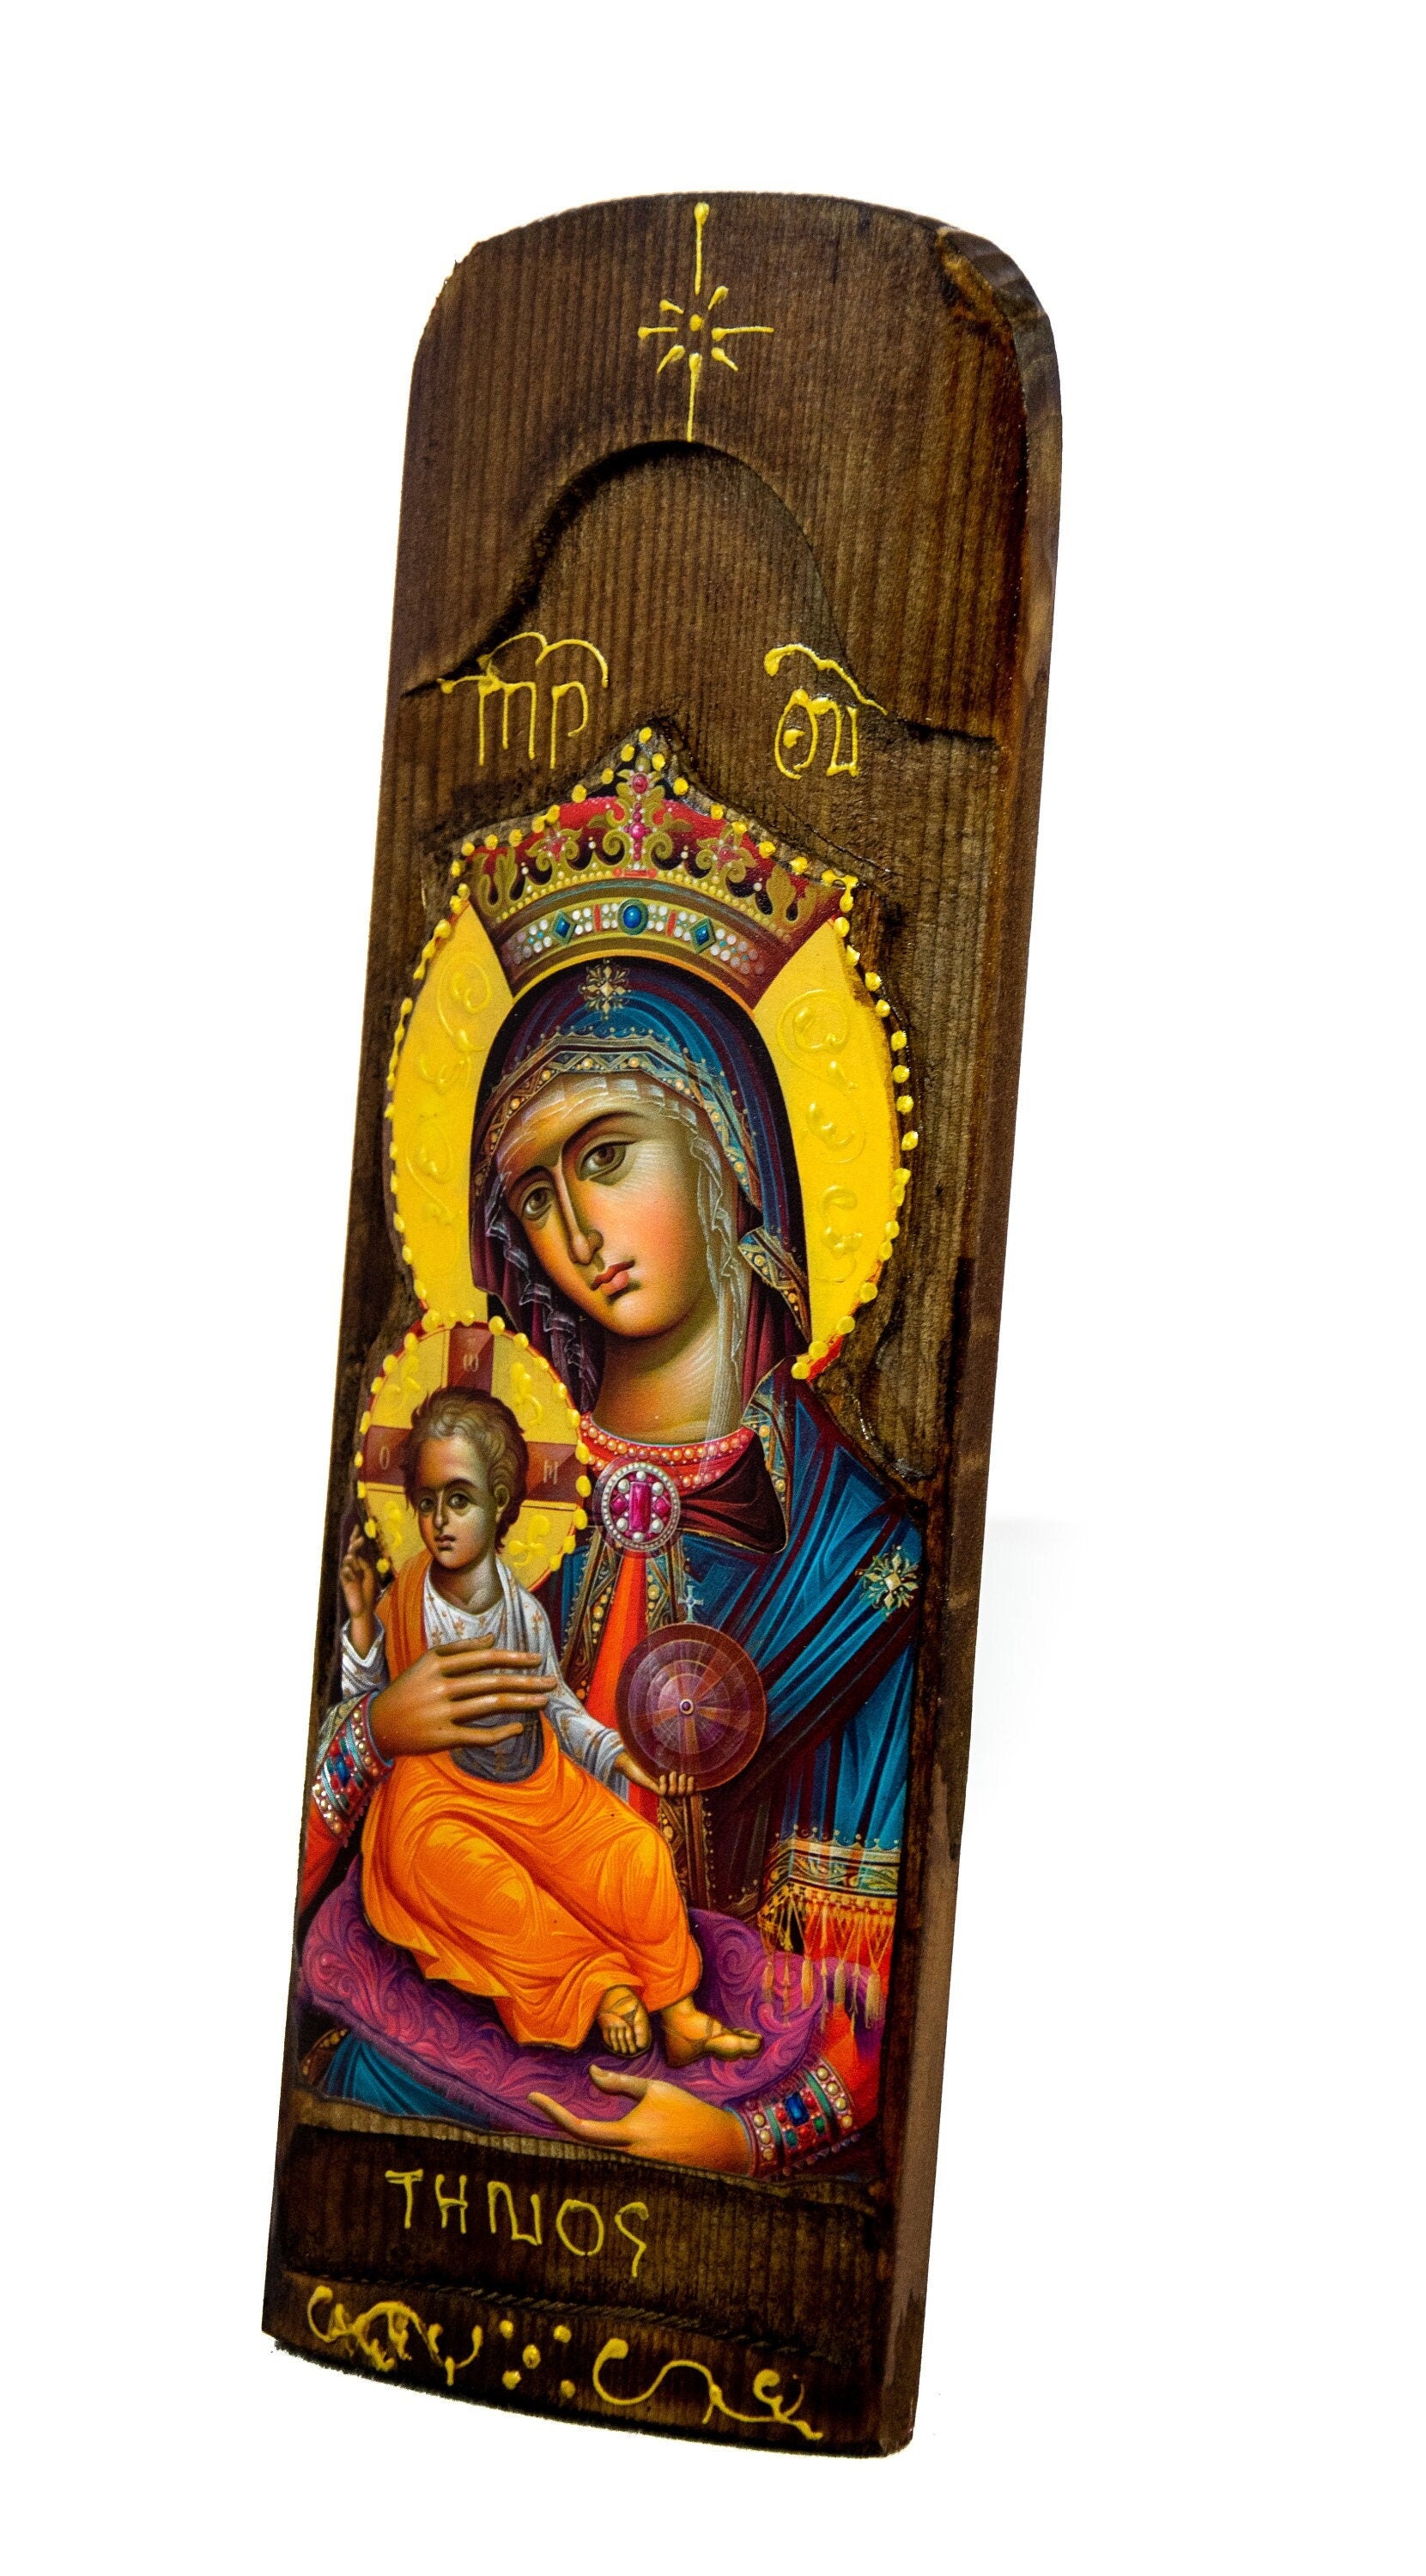 Virgin mary icon panagia, handmade greek orthodox icon, mother of god byzantine art, theotokos wall hanging wood plaque religious decor TheHolyArt